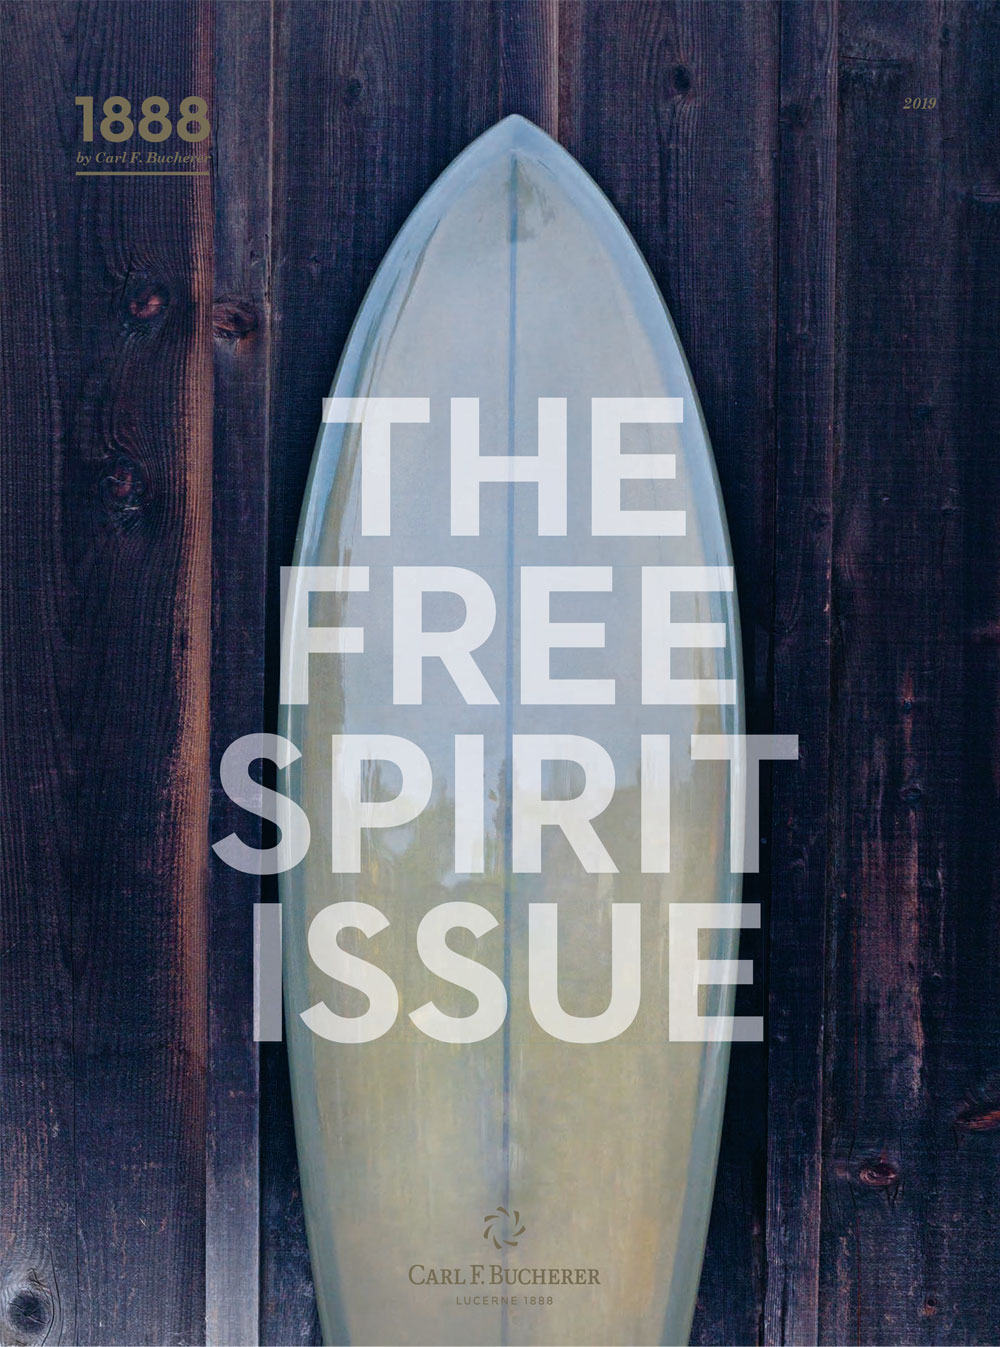 The Free Spirit Issue